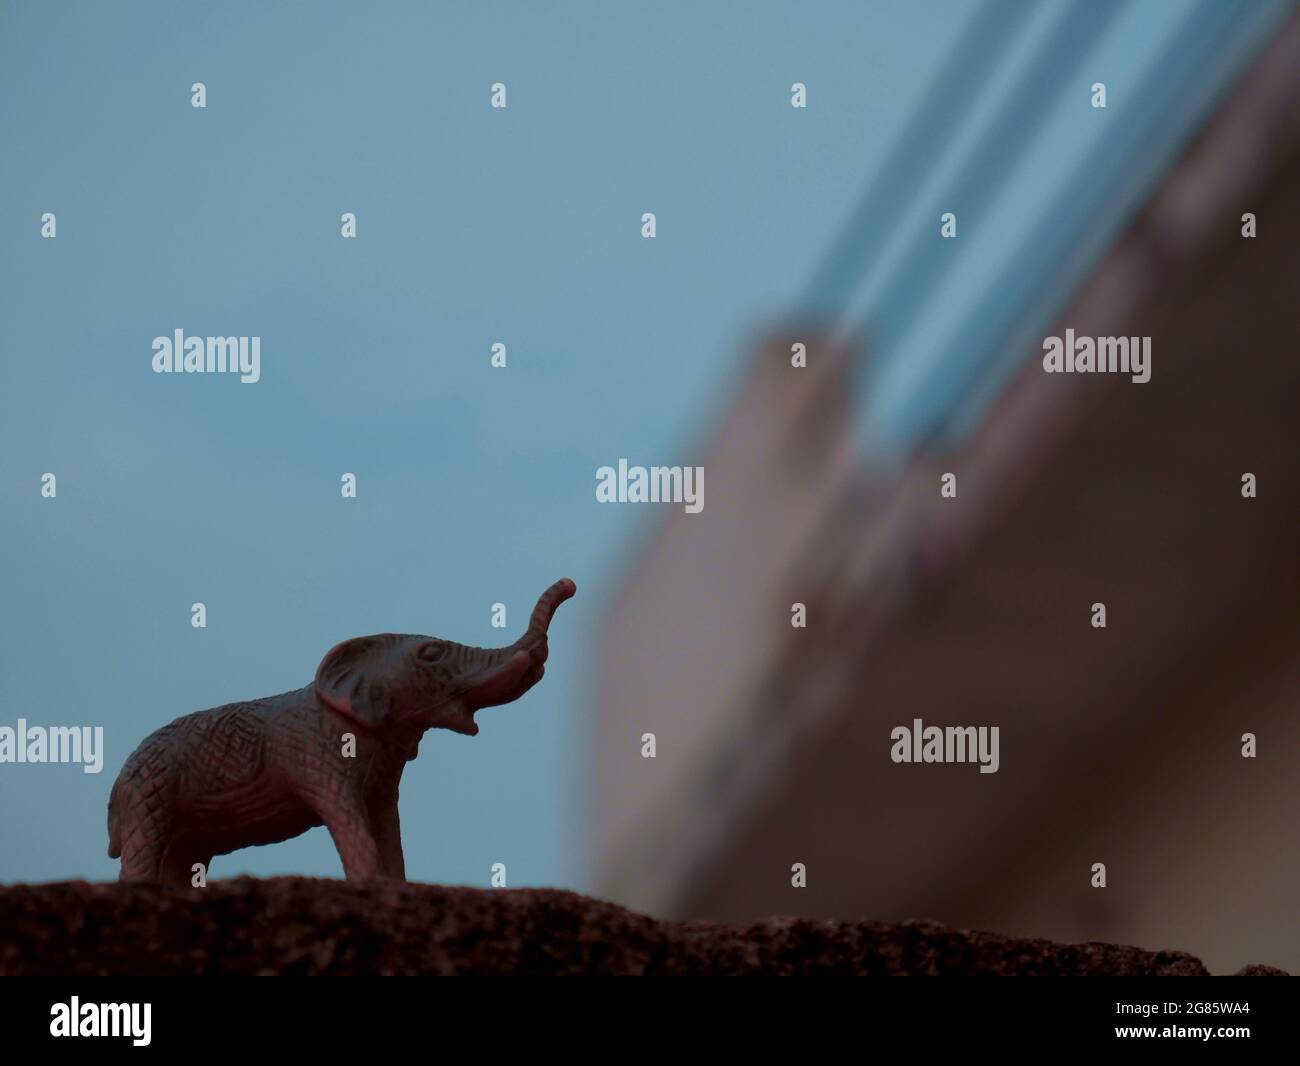 Plastic Elephant toy animal presentation near house architecture blur with sky background. Stock Photo